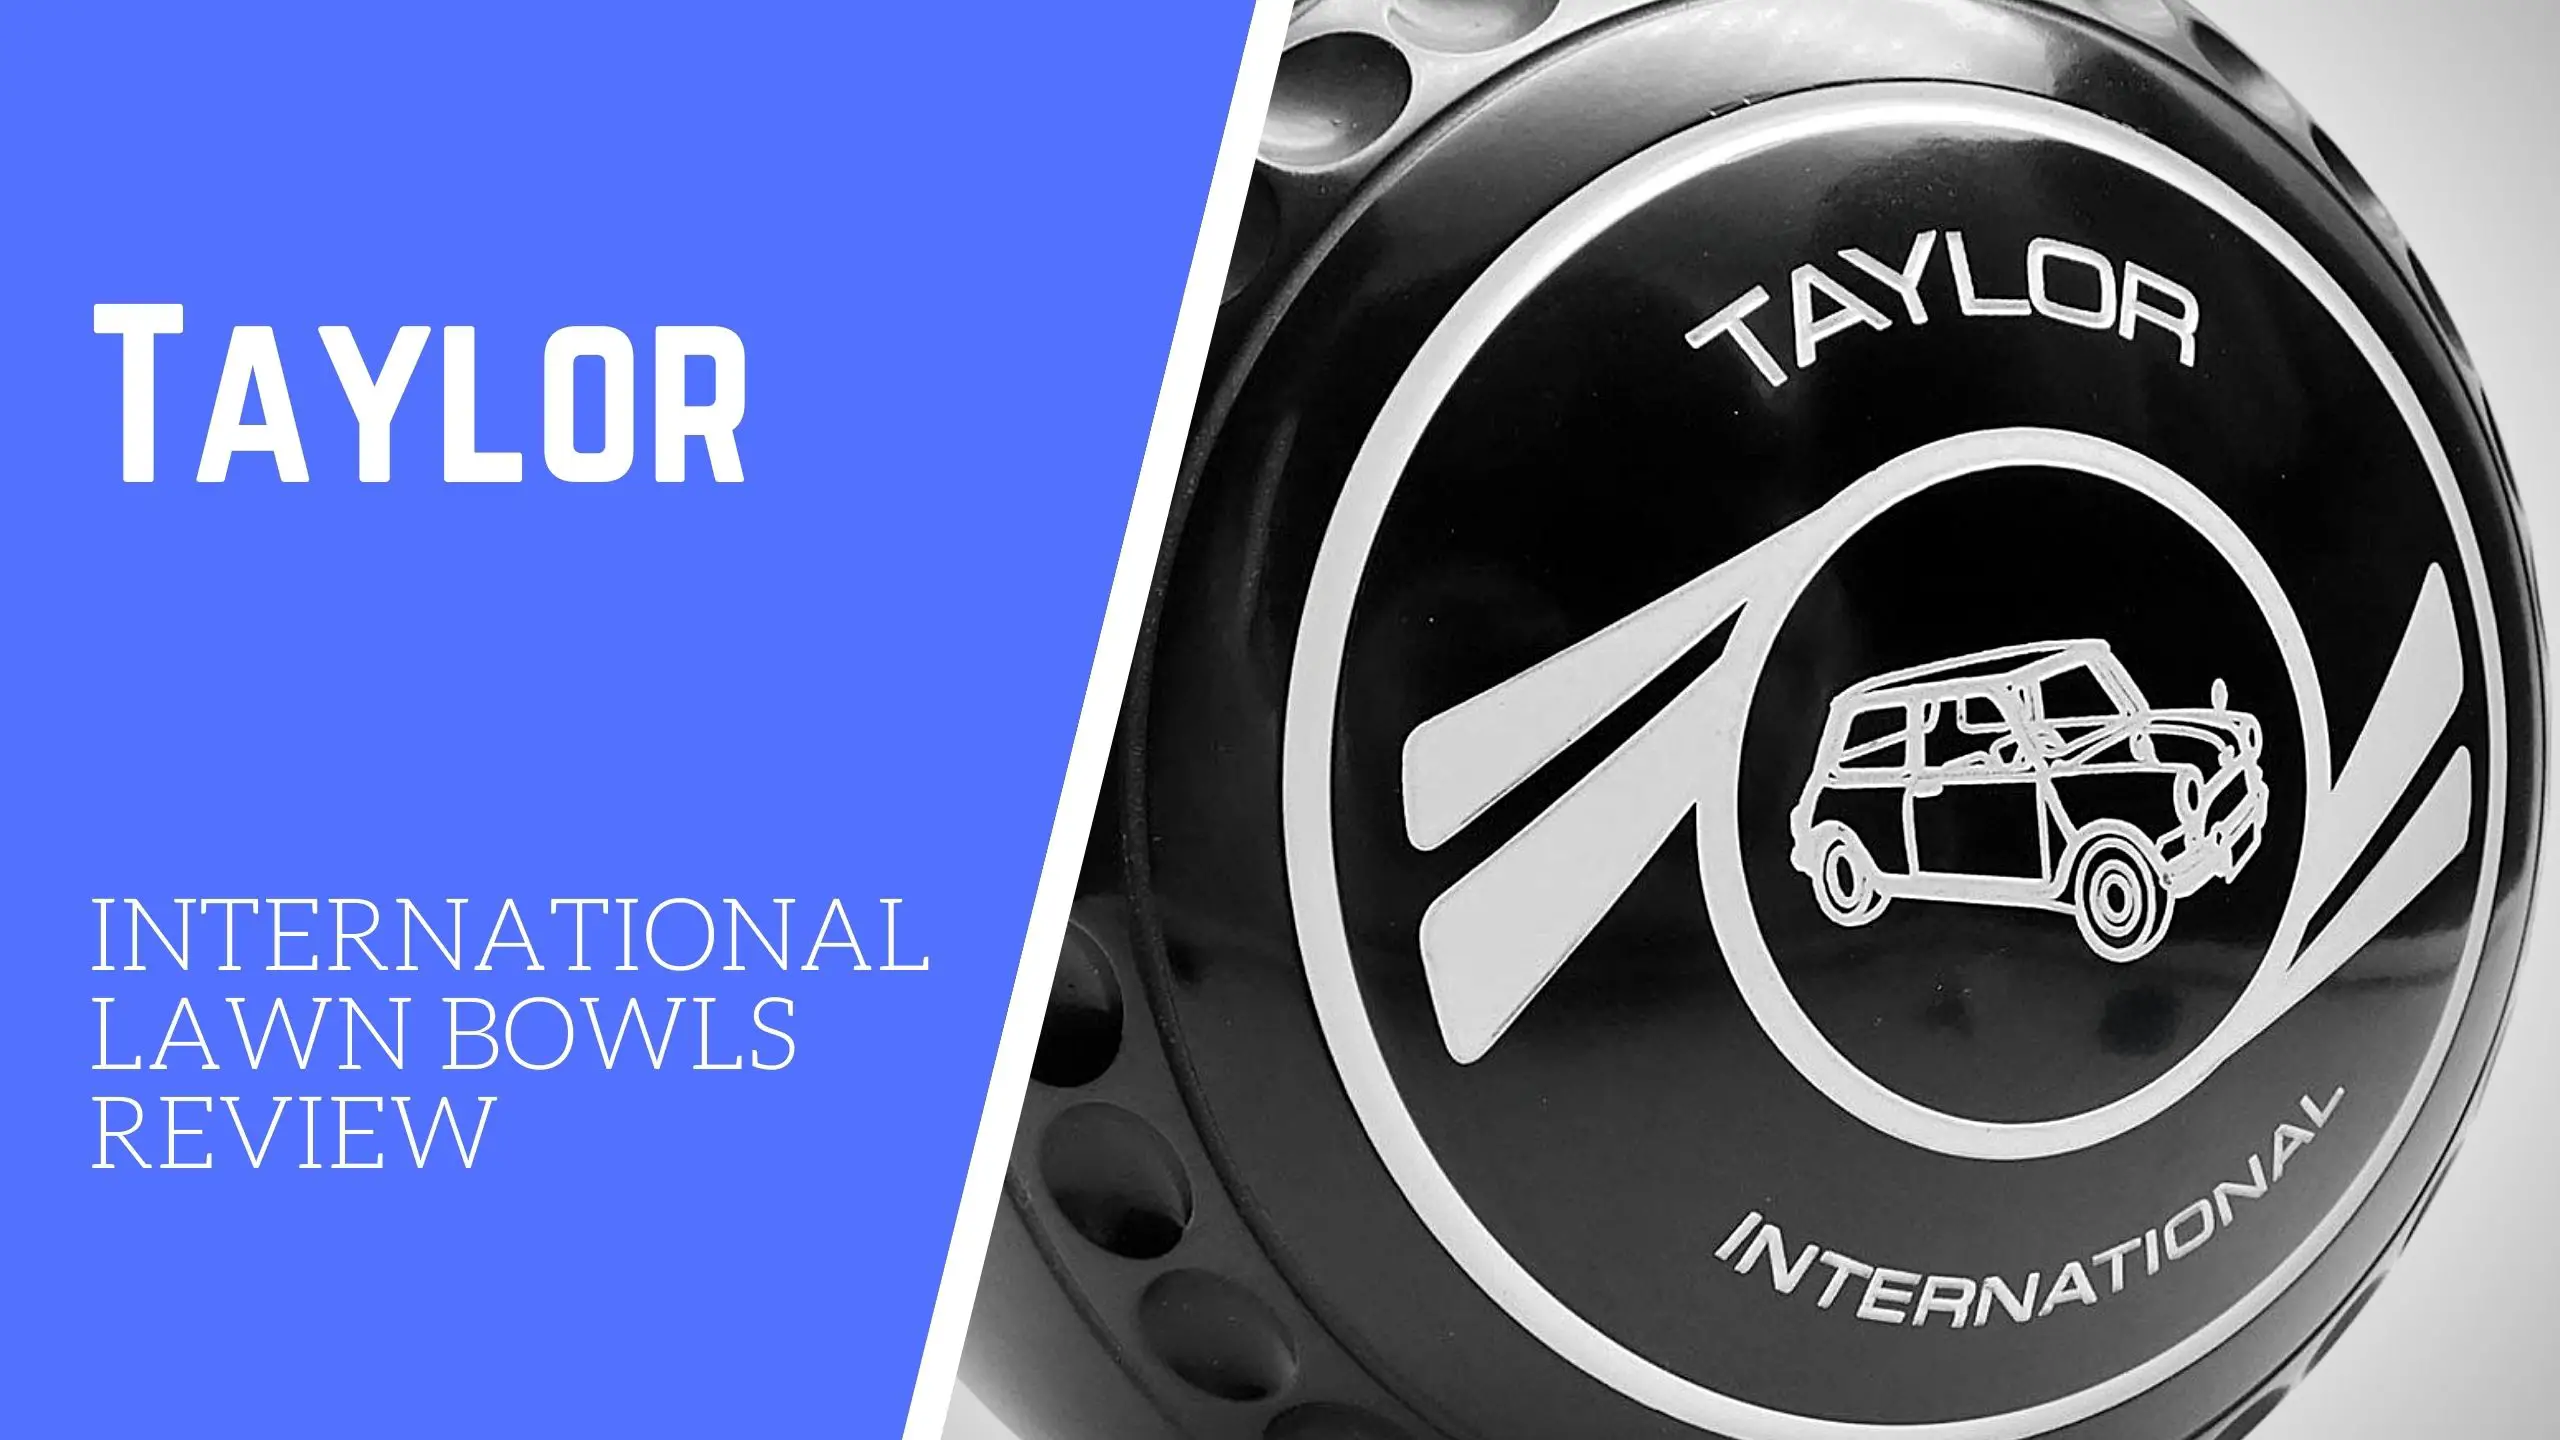 Taylor International Lawn Bowls Review